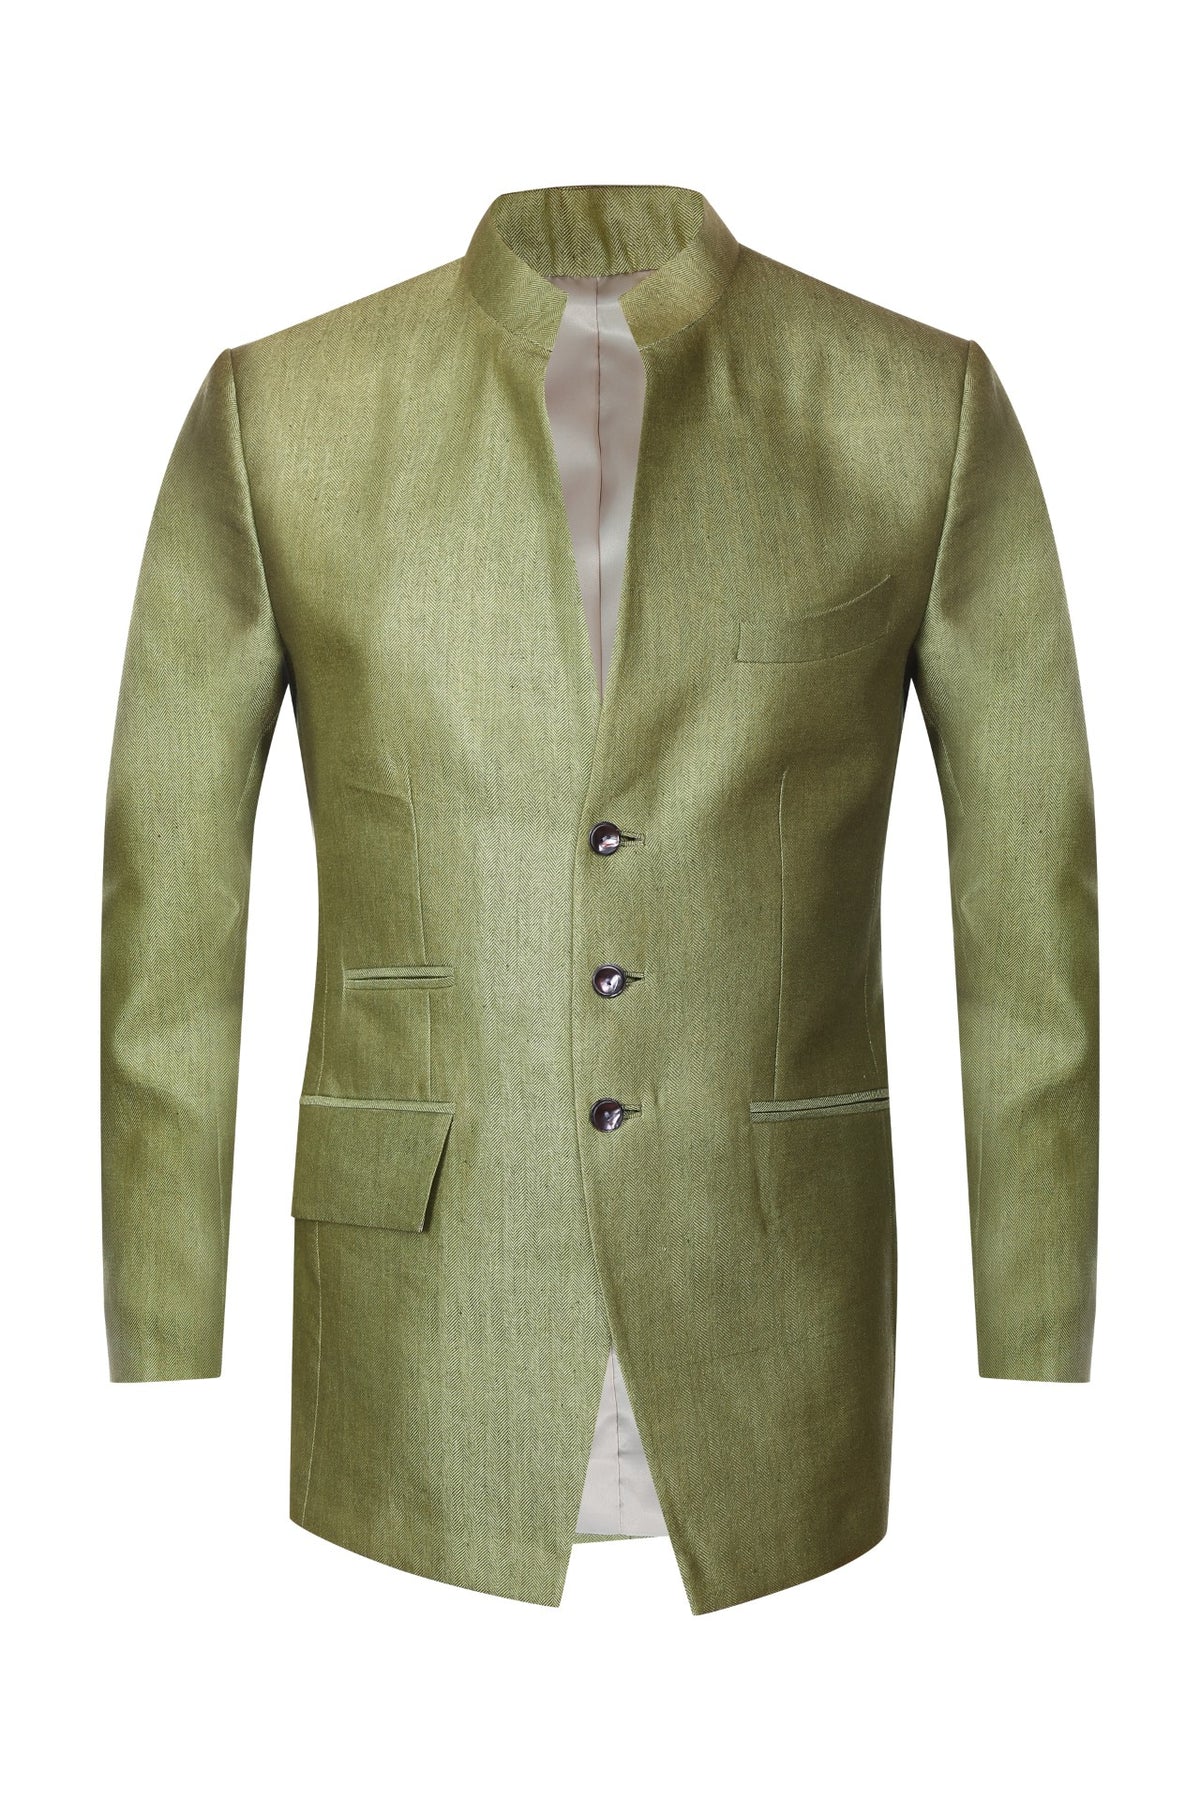 Green bandhgala in herringbone matka silk fabric